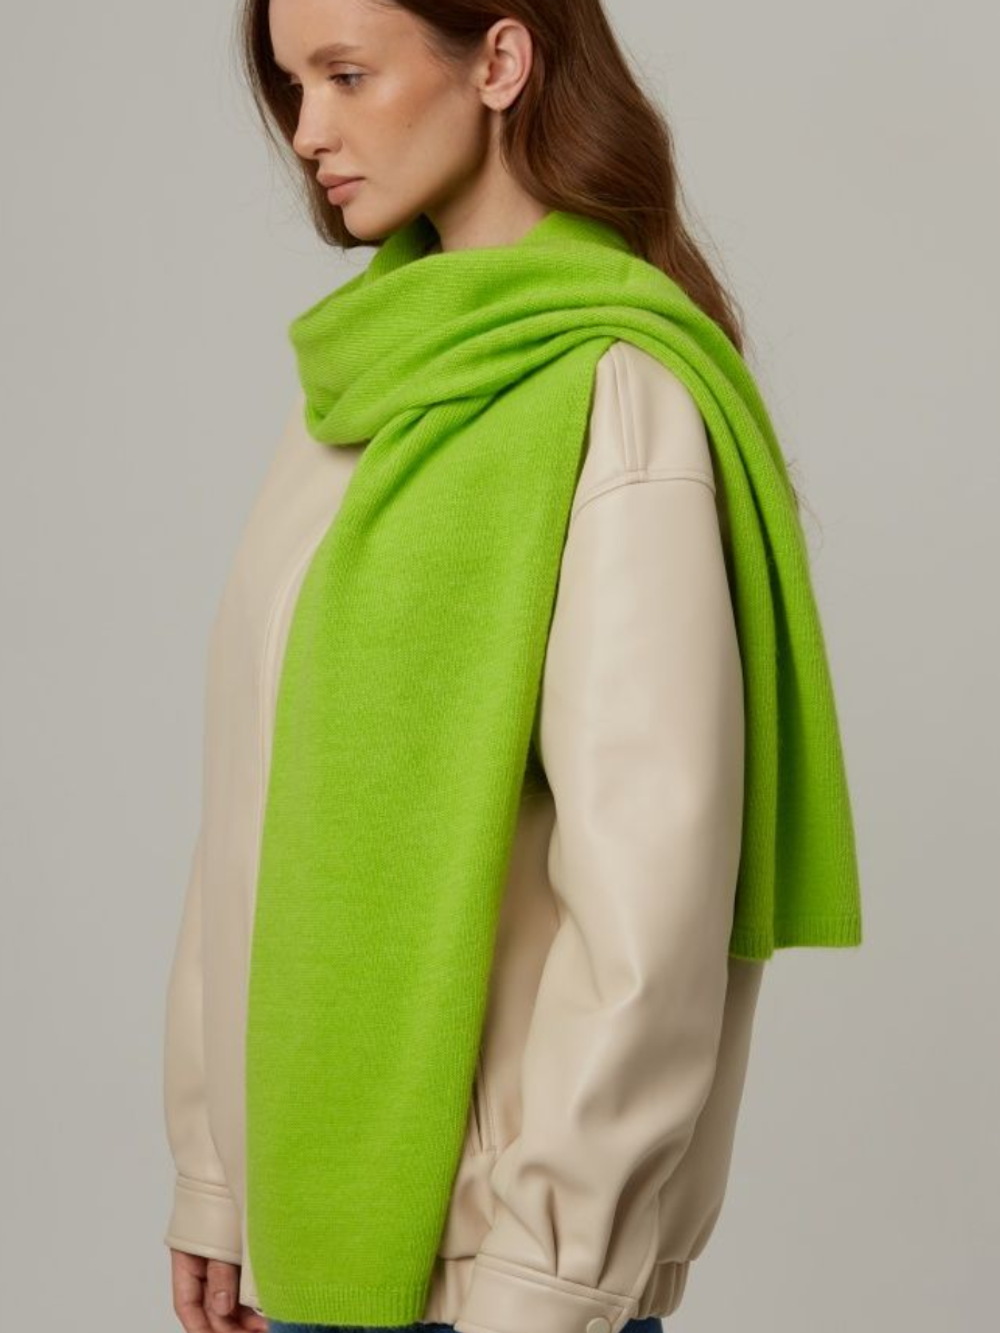 Пуховый шарф Ш402-12Н зеленый неон